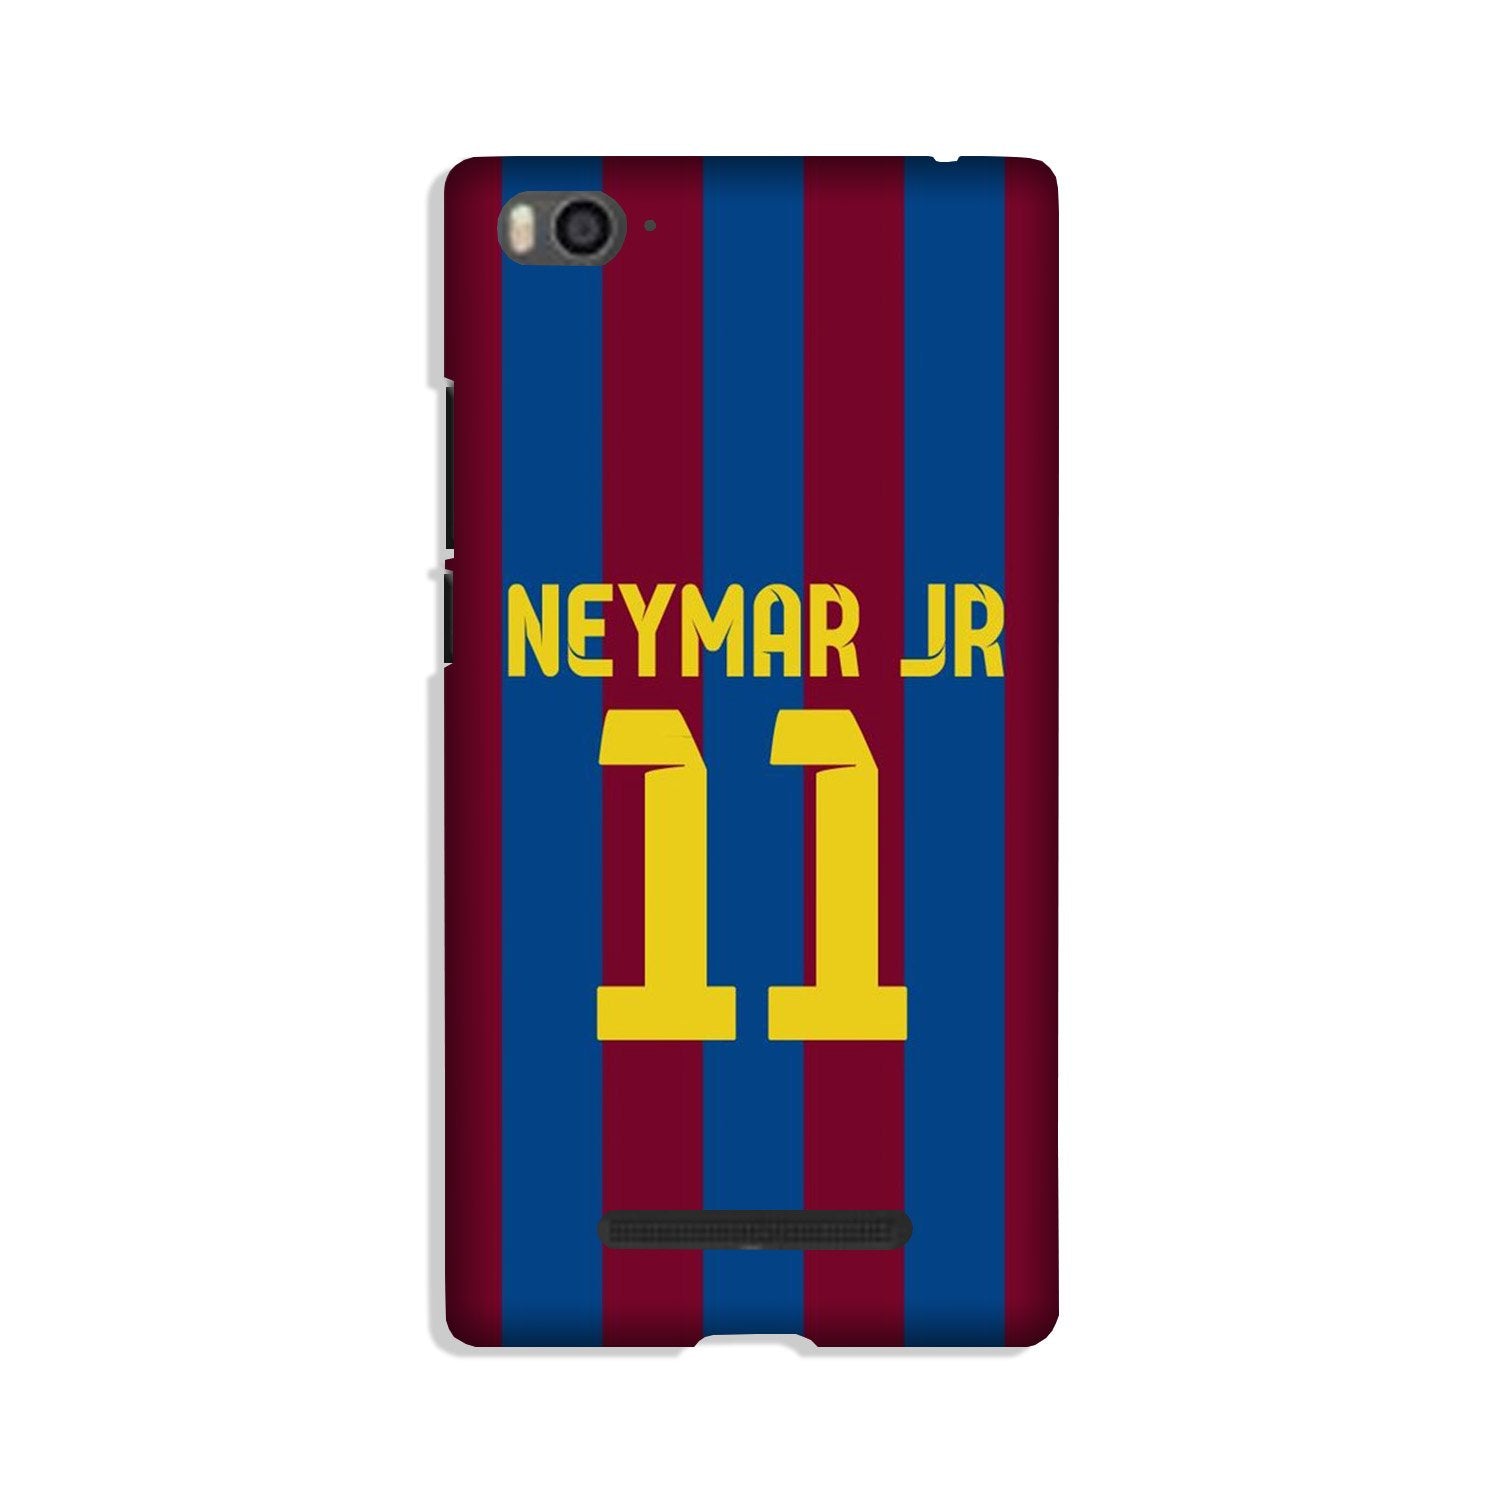 Neymar Jr Case for Xiaomi Mi 4i  (Design - 162)